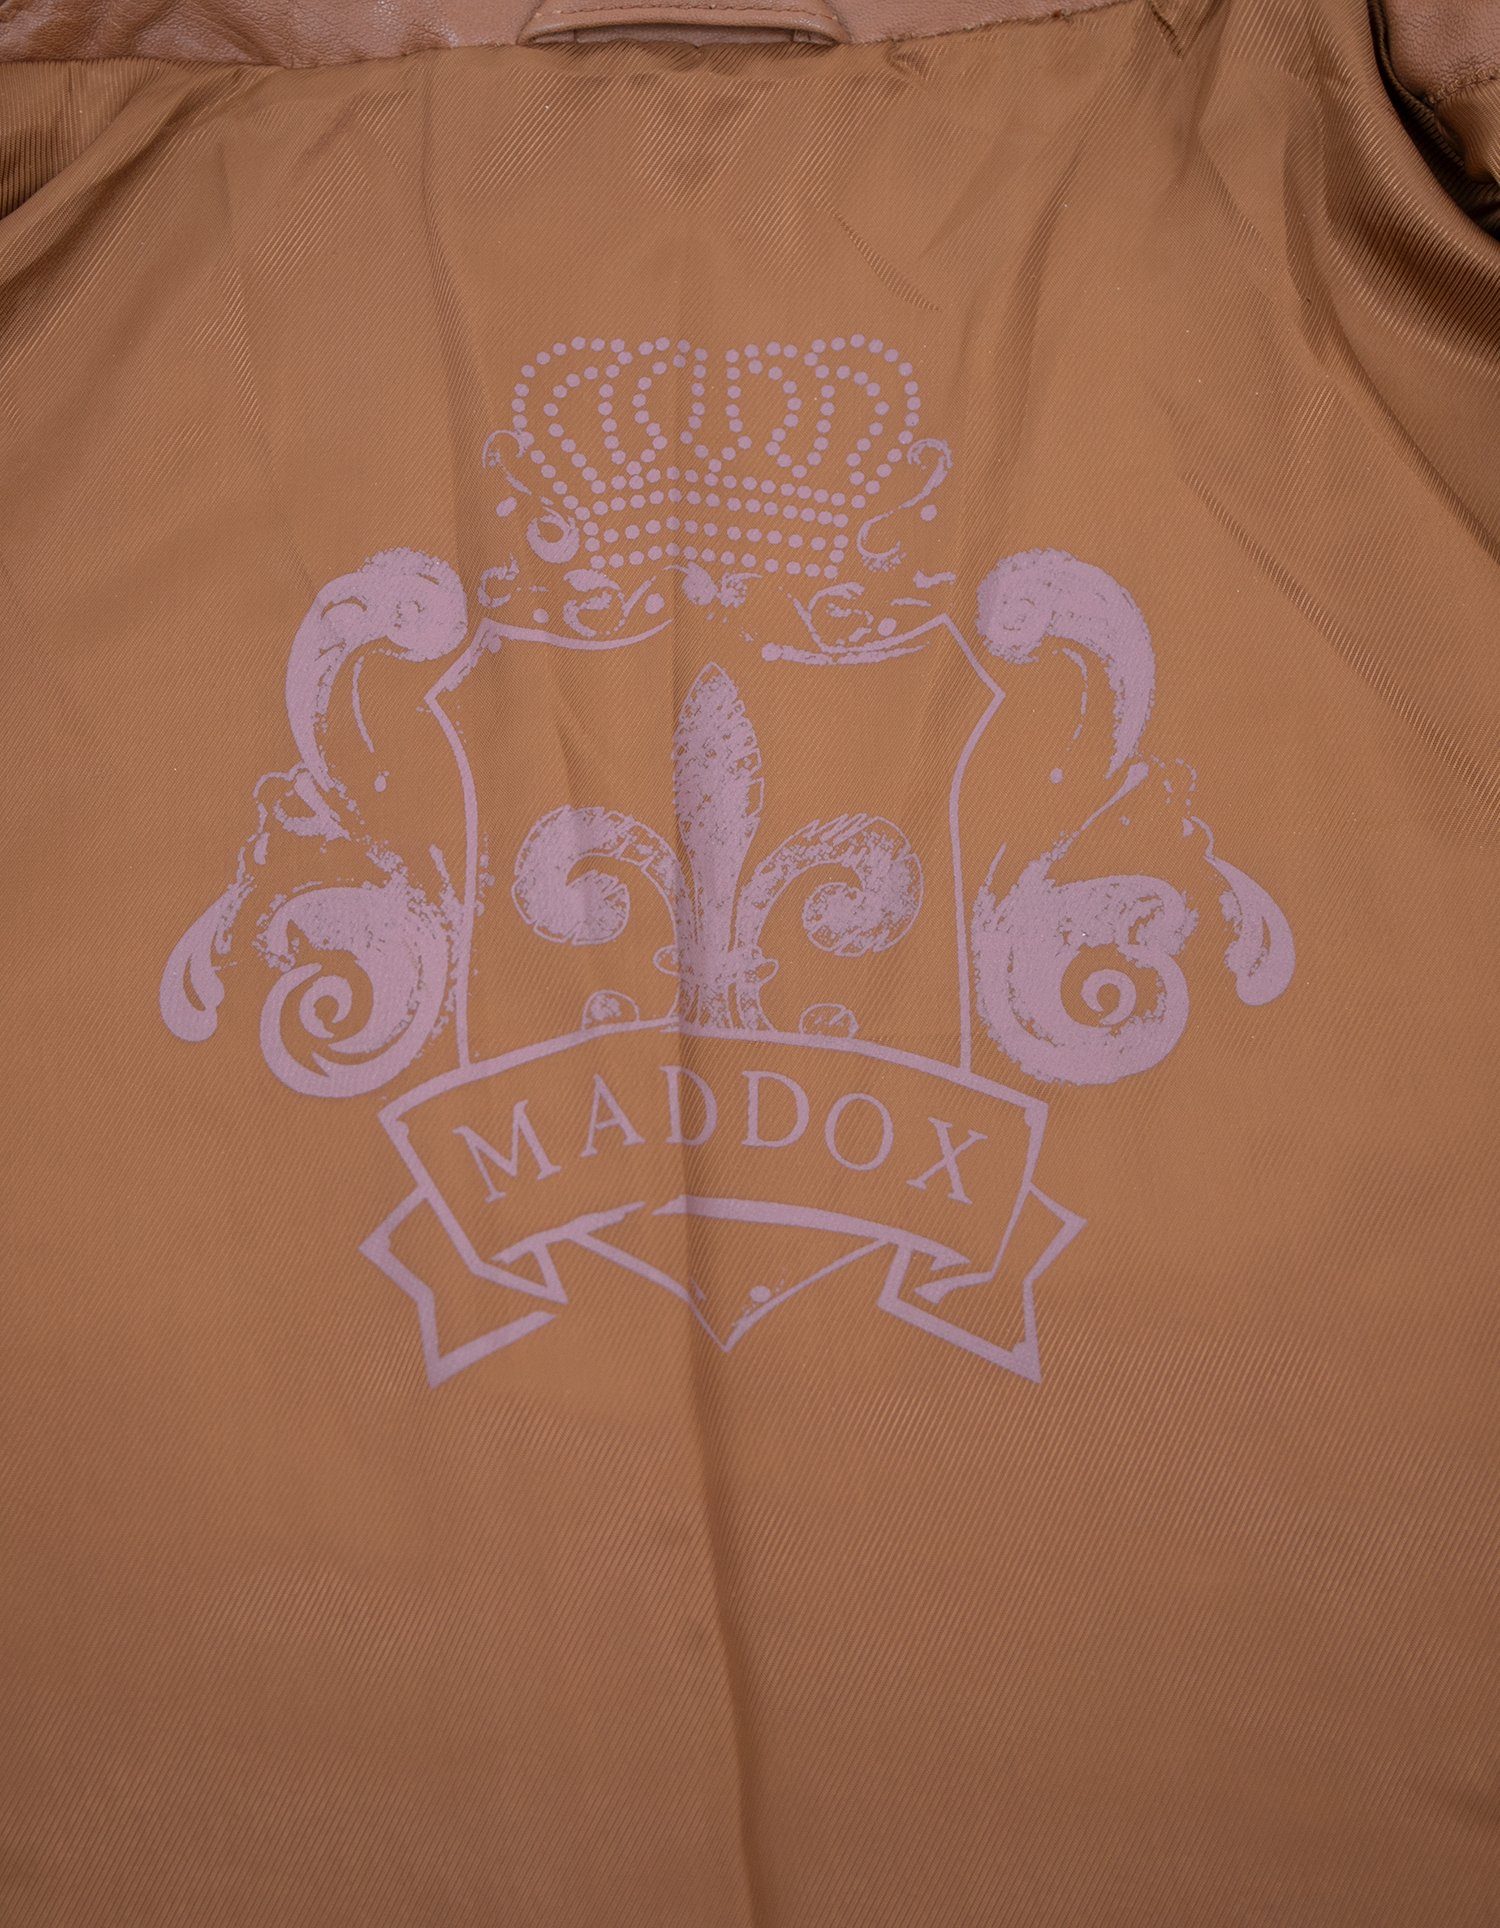 MADDOX Maddox cognac Übergangsmantel Lammnappa - Ledermantel Echtleder Sonja-20 Damen Lederjacke